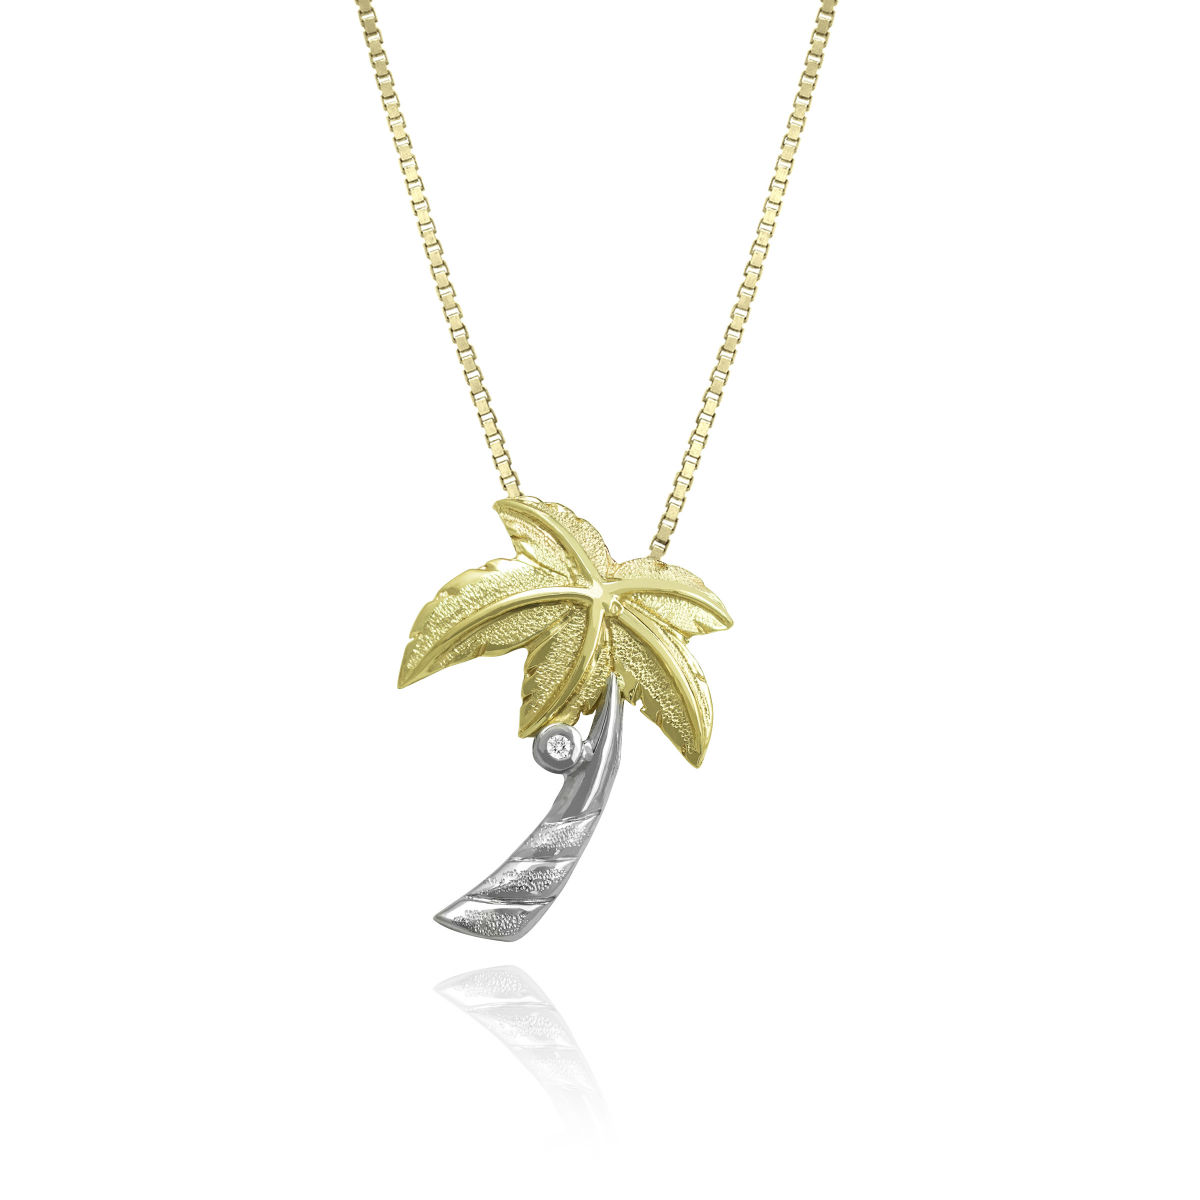 Pendant & Necklace Jewelry by Honolulu Jewelry Company